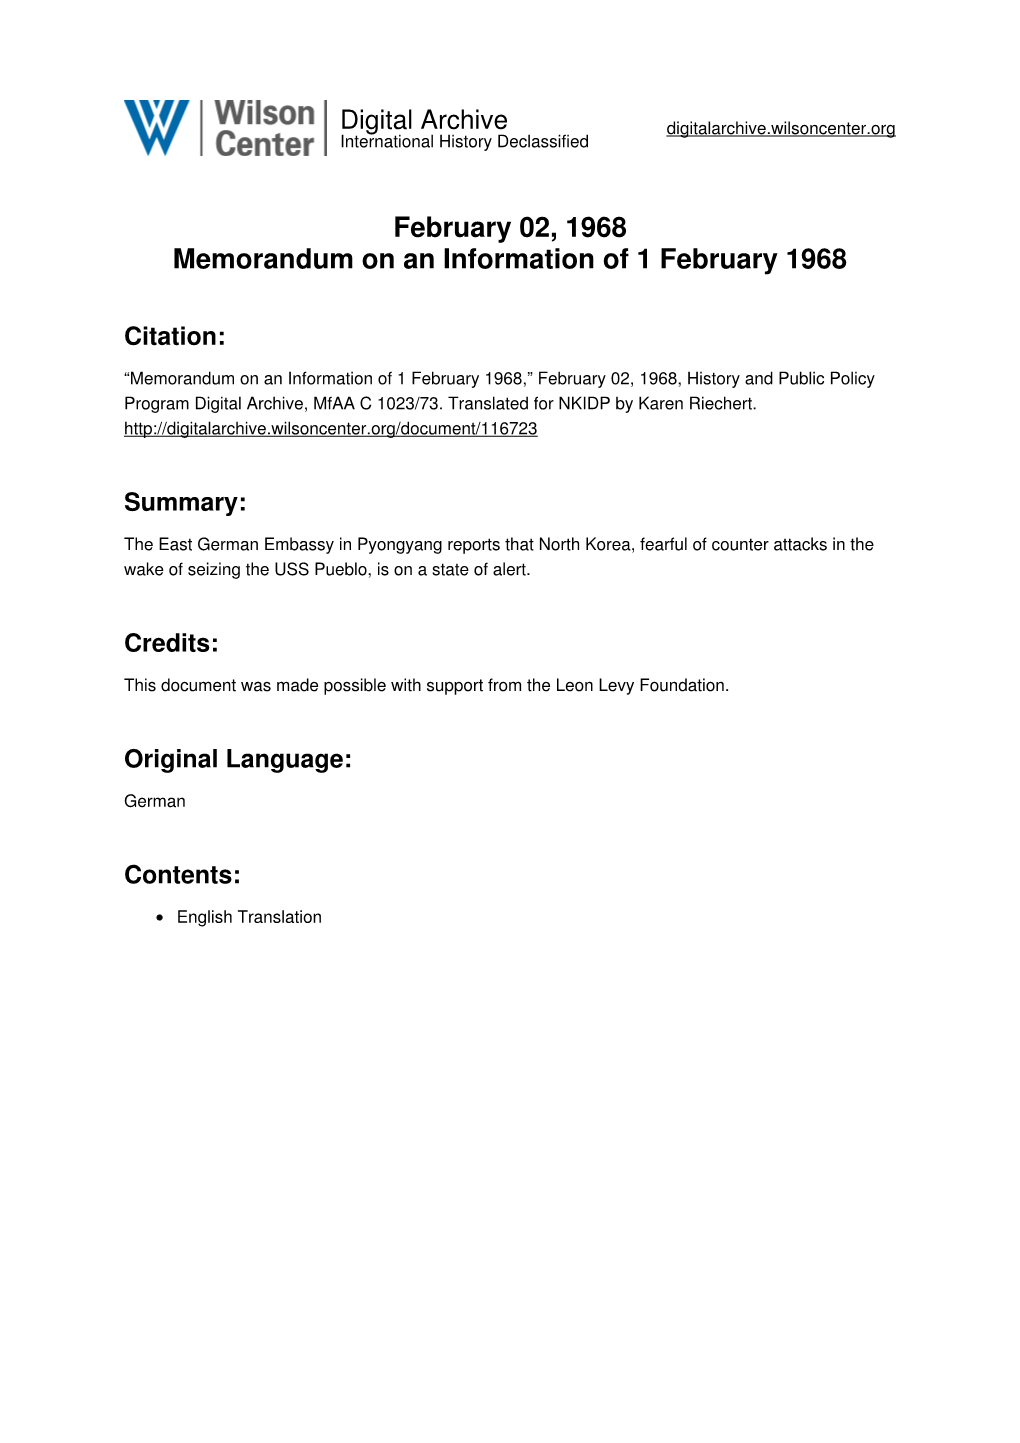 February 02, 1968 Memorandum on an Information of 1 February 1968